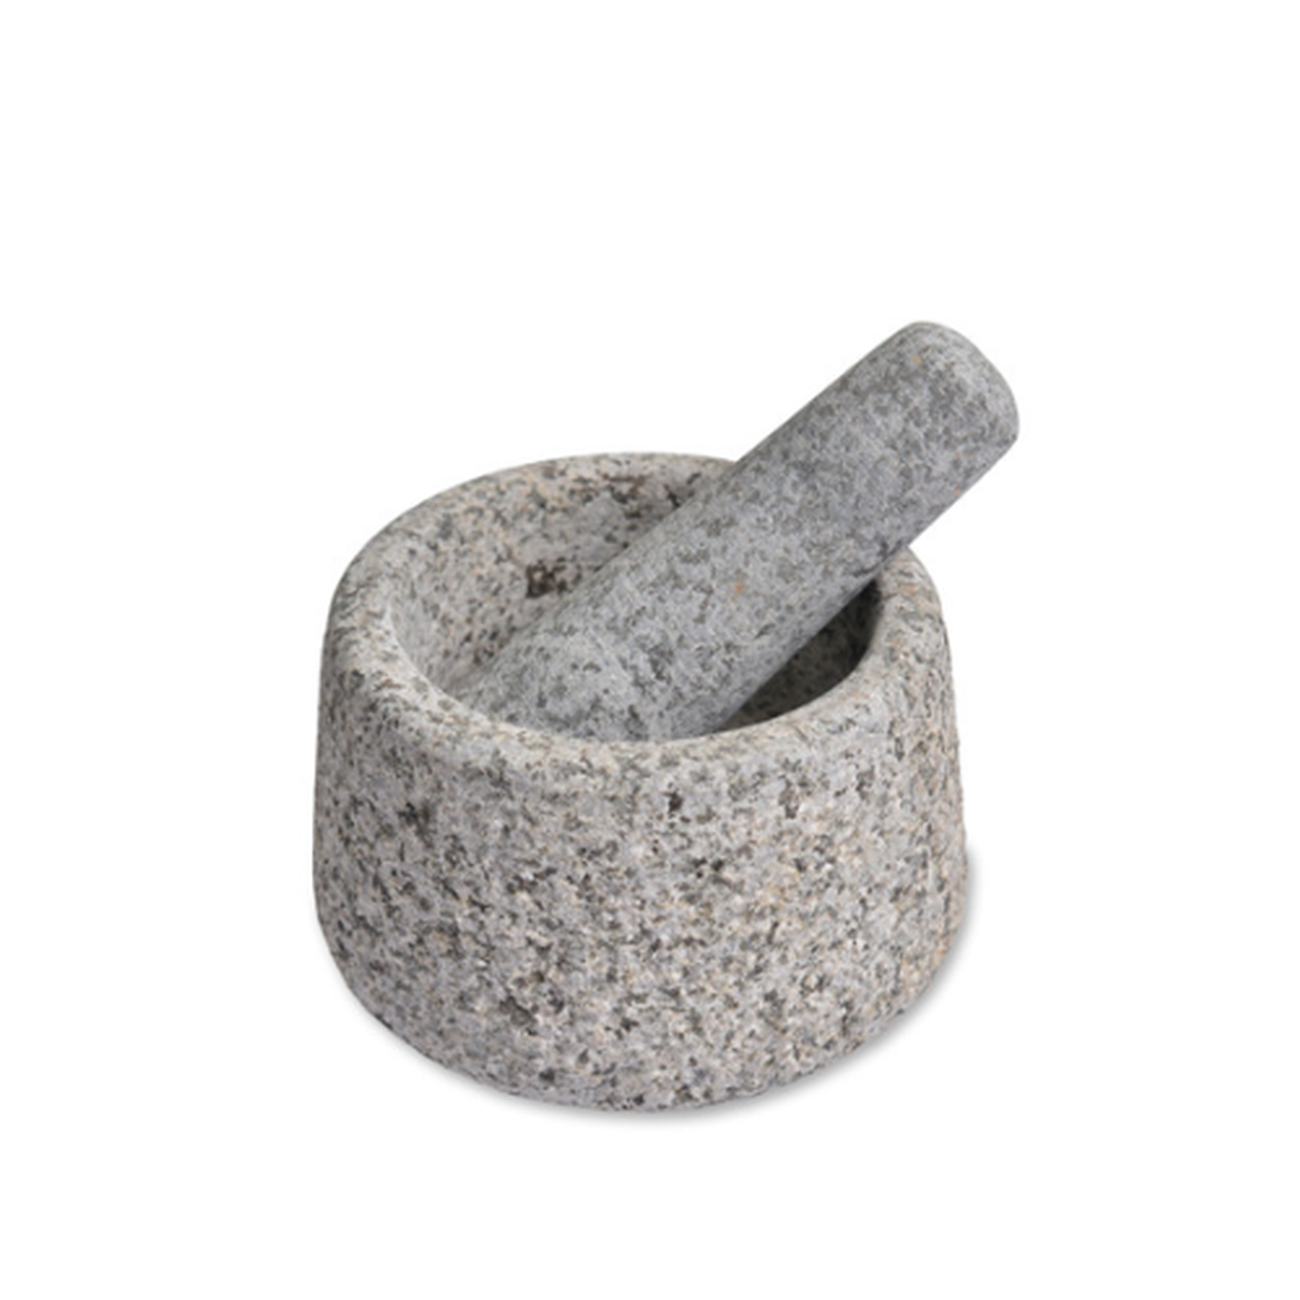 gt-pestle-mortar-granite - Garden Trading Pestle & Mortar Granite